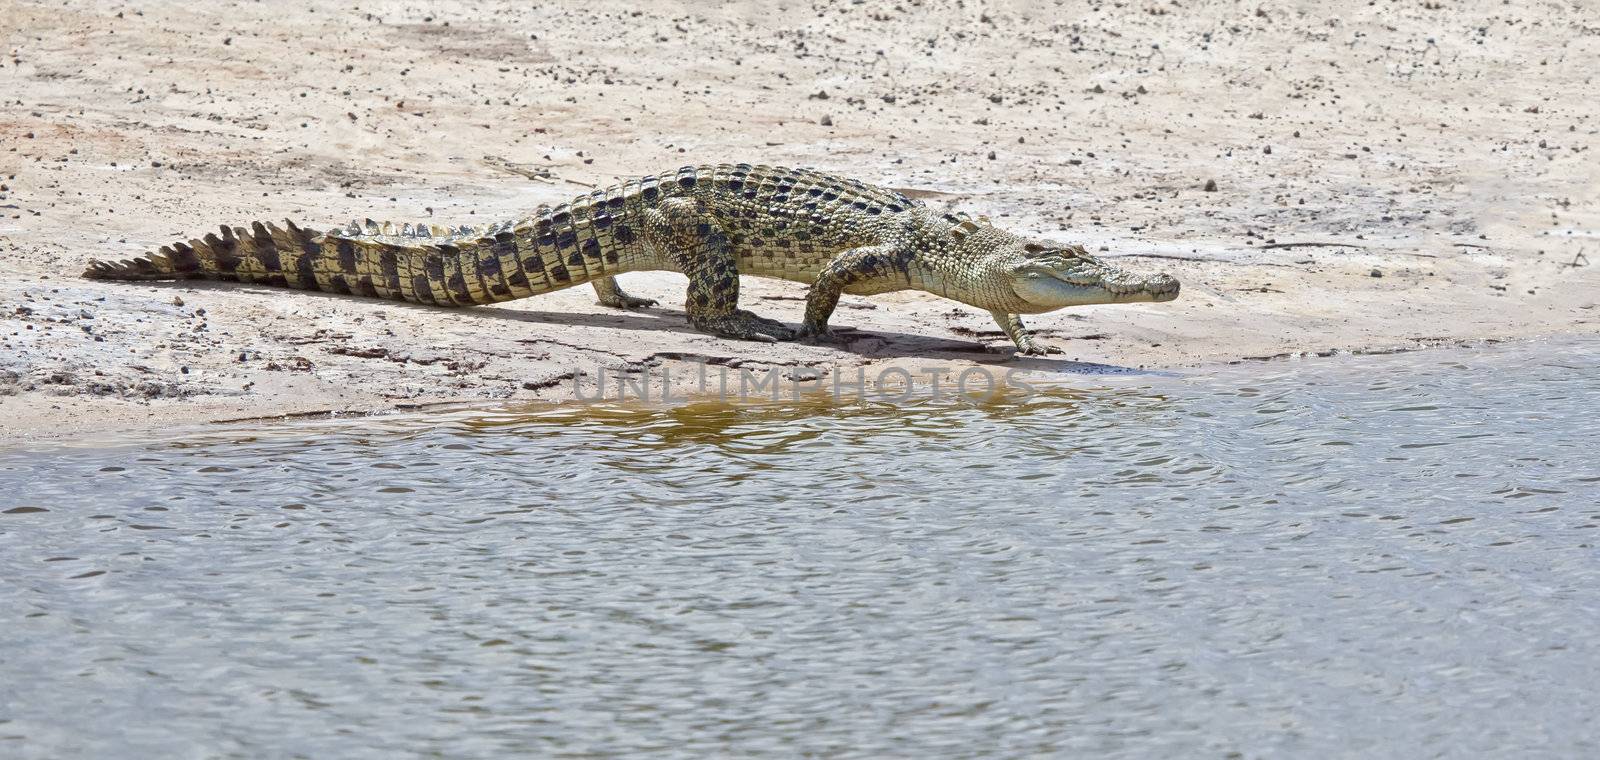 An image of a salt water crocodile in Australia